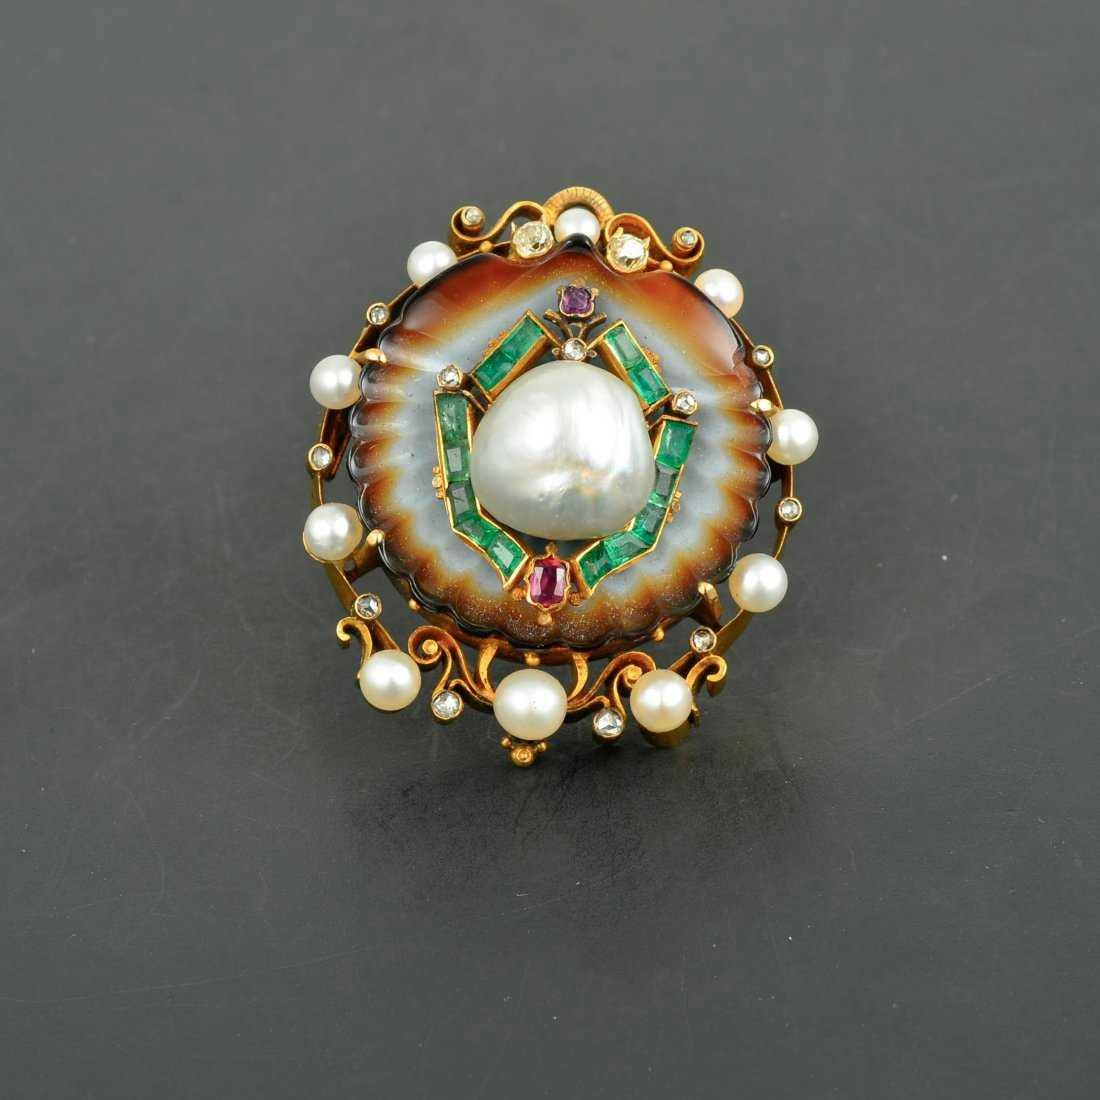 saltwater pearls - antique Victorian brooch